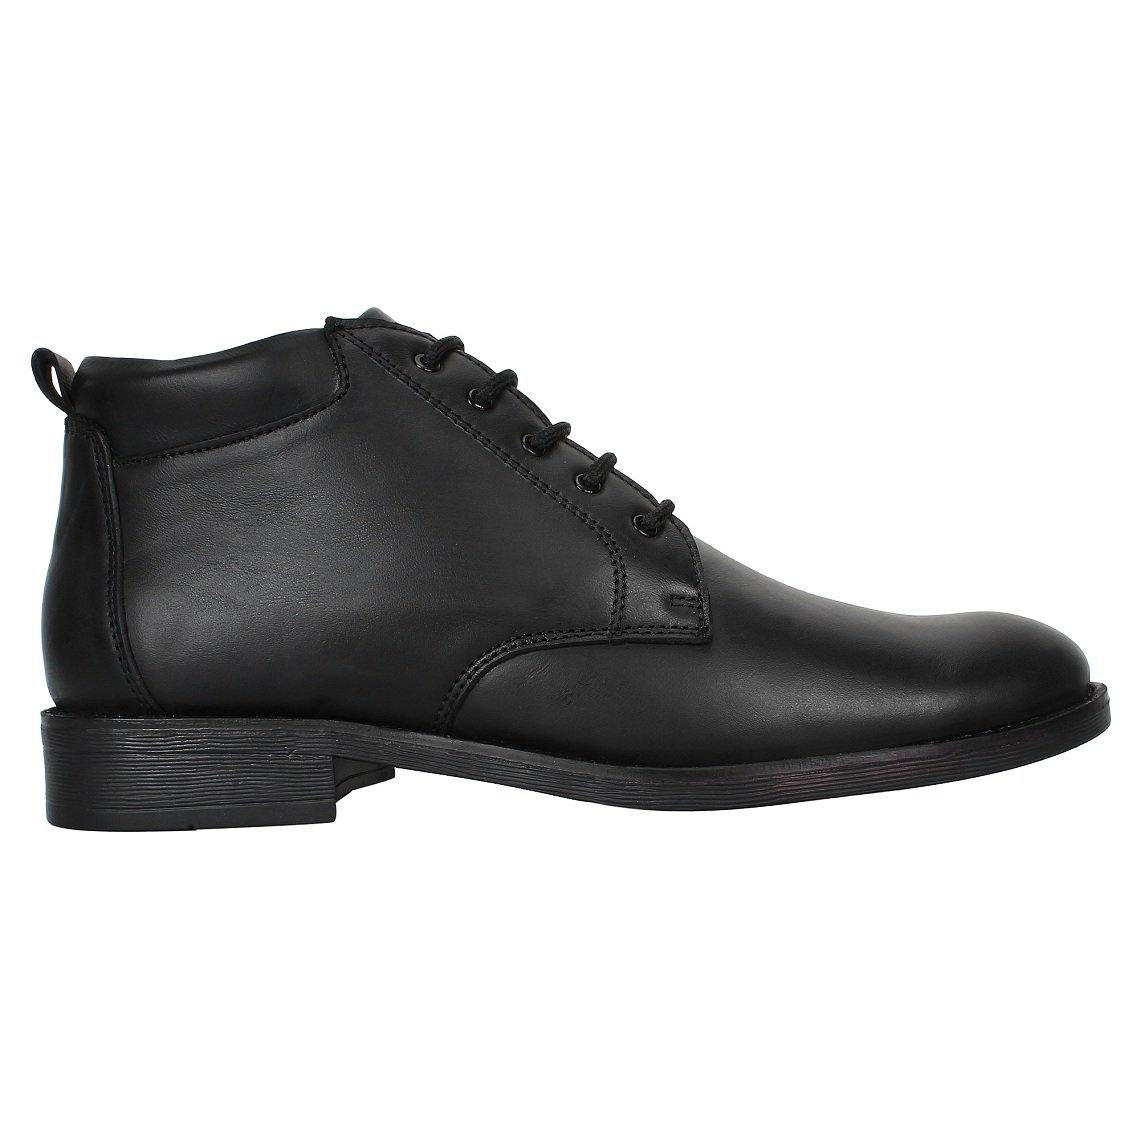 SeeandWear Genuine Leather Classic Ankle Boots - SeeandWear